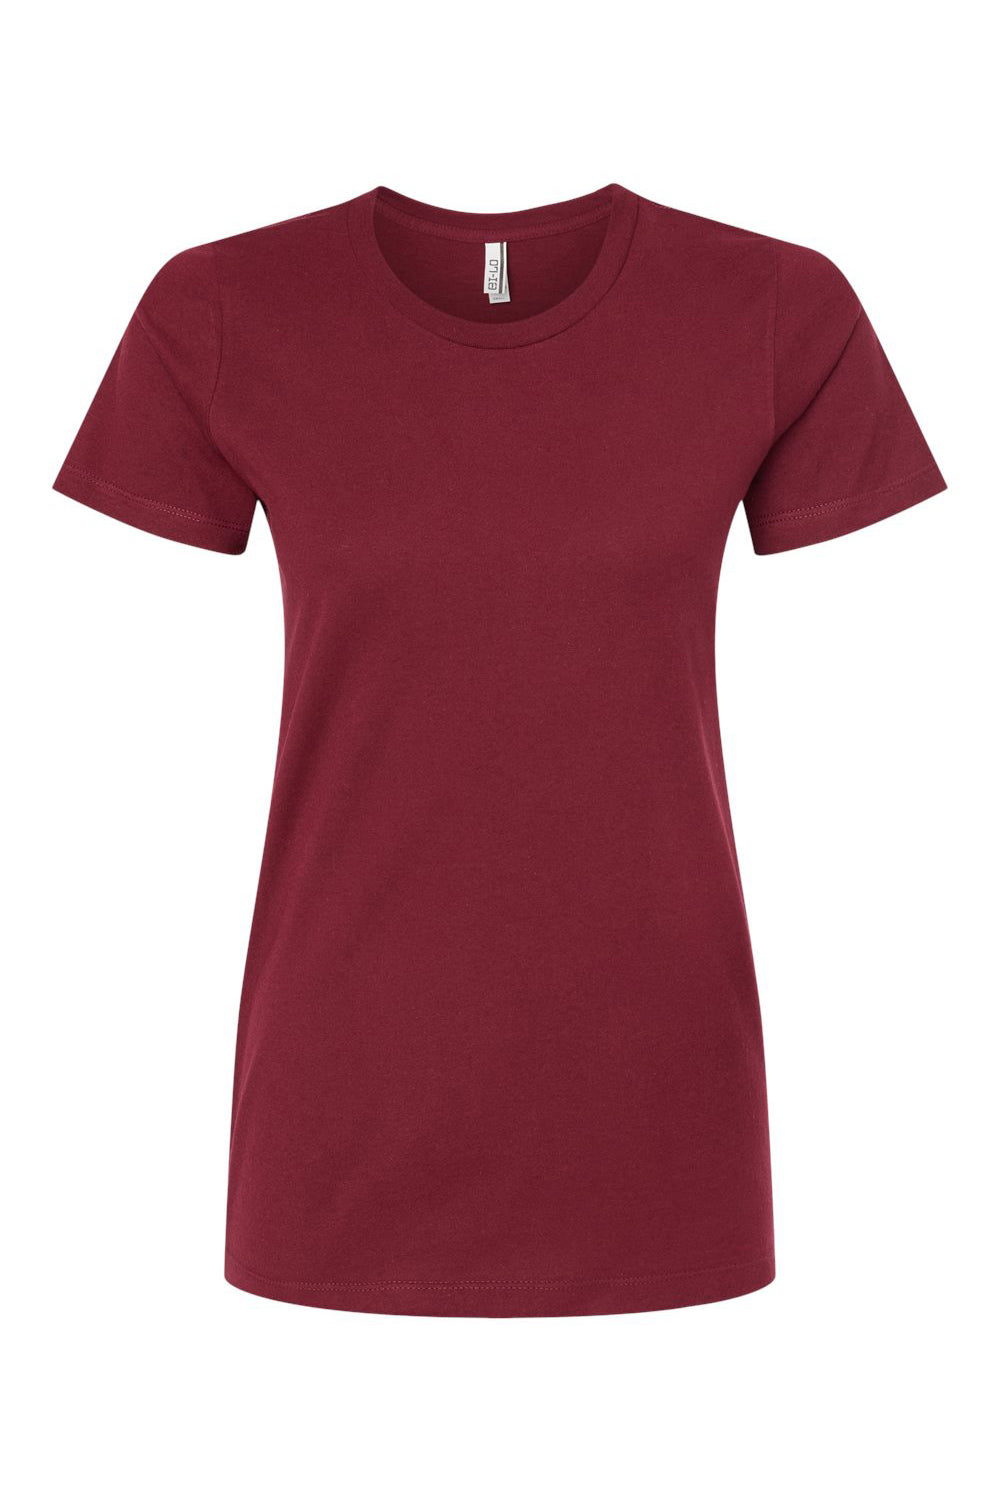 Tultex 516 Womens Premium Short Sleeve Crewneck T-Shirt Burgundy Flat Front